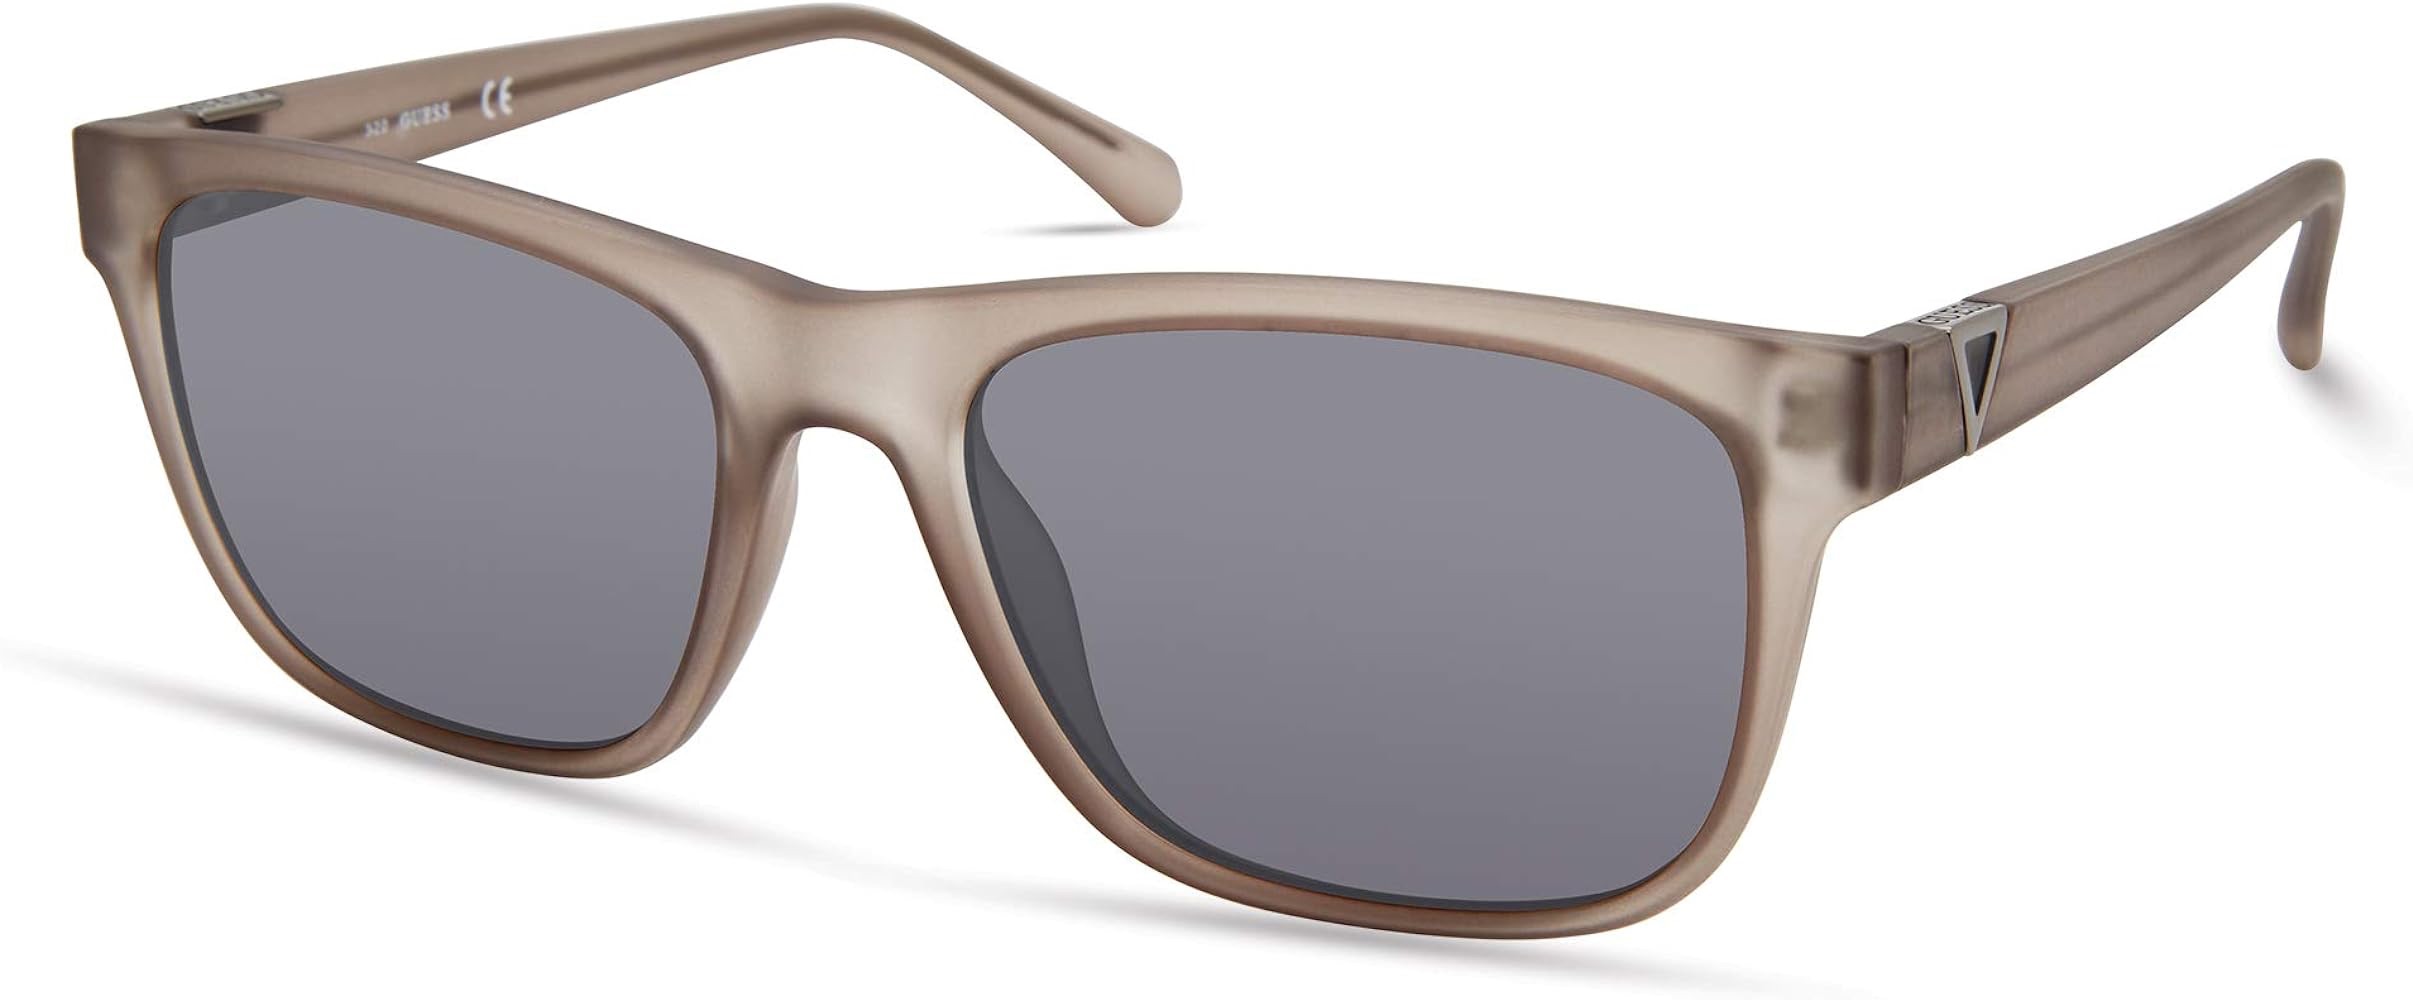 Amazon.com: GUESS Men's Classic Sleek Square Sunglasses, Grey, 55mm : Clothing, Shoes & Jewelry